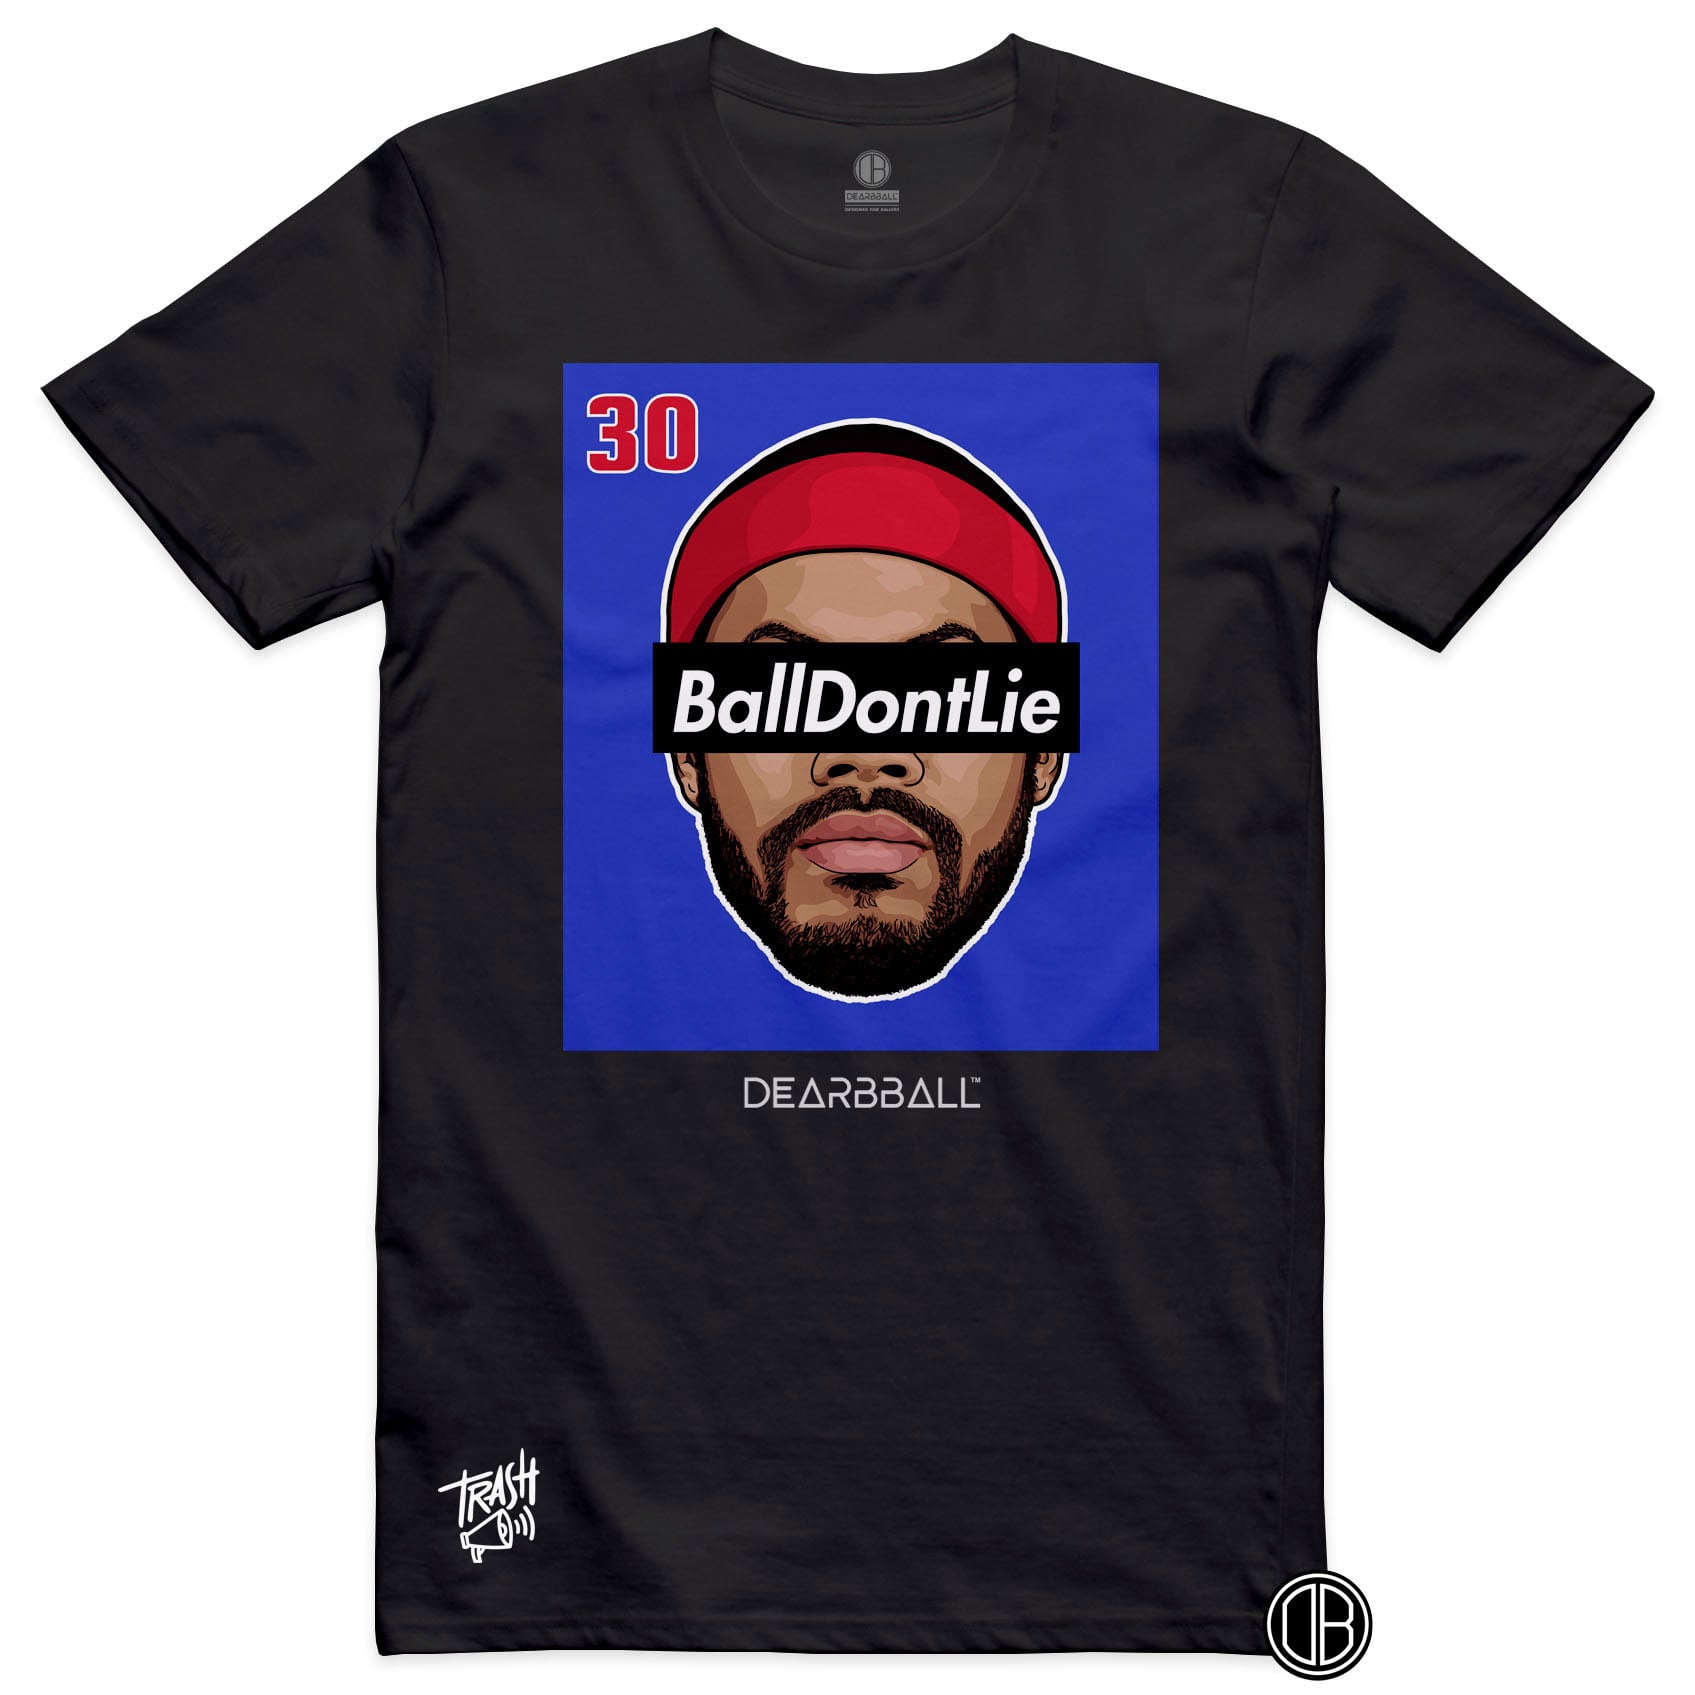 DearBBall Premium T-Shirt - BallDontLie Detroit Trash 📢 Broderie Edition